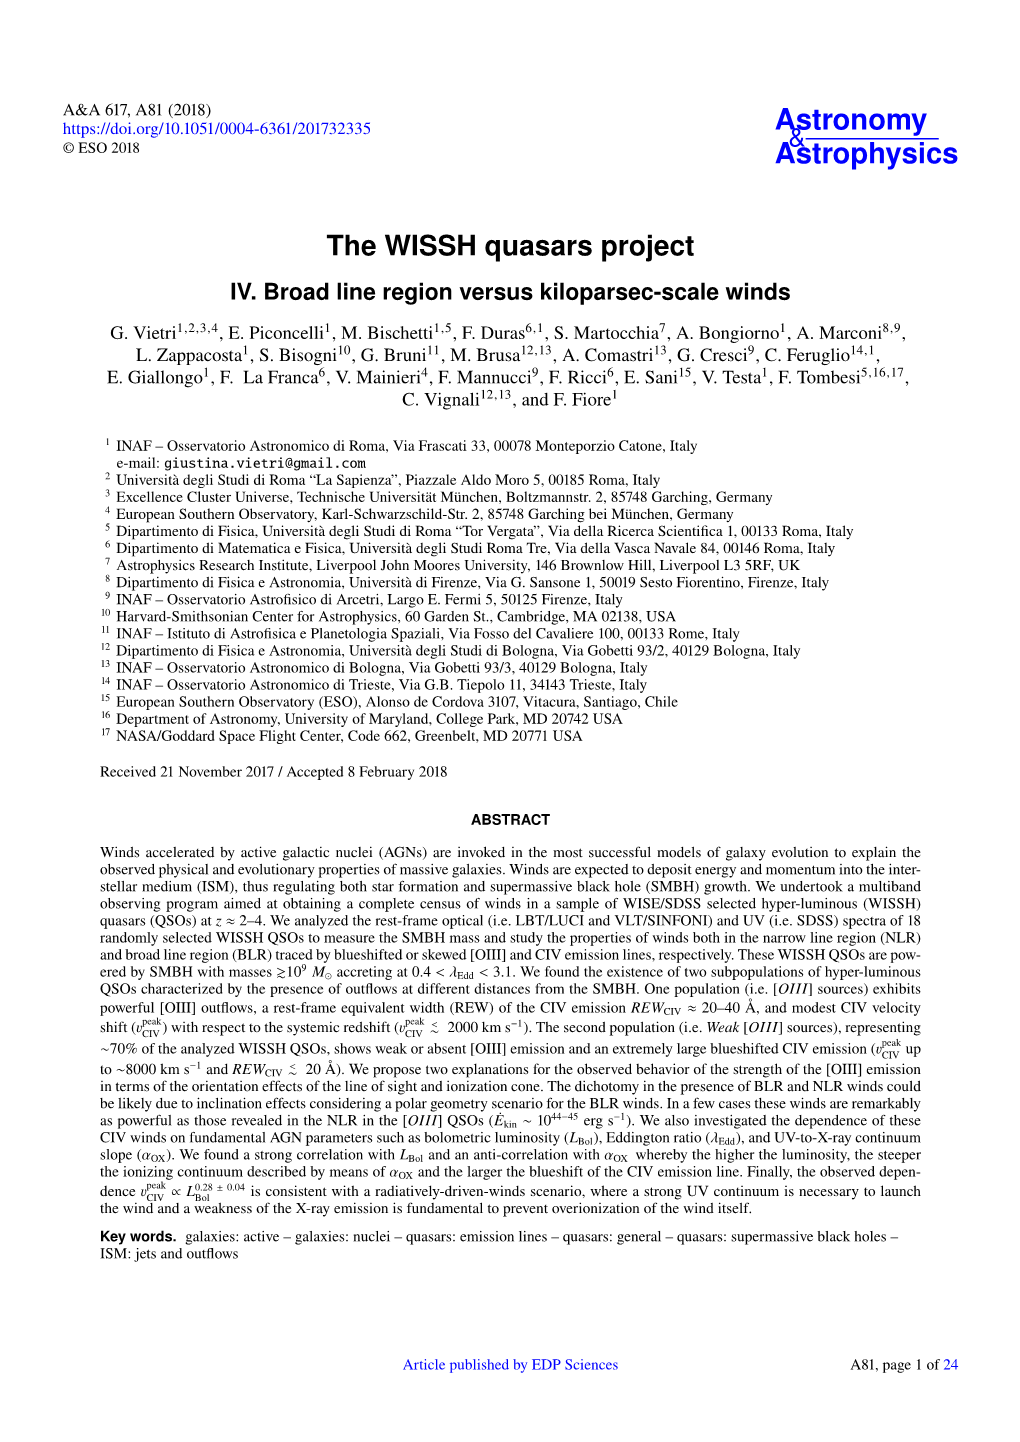 The WISSH Quasars Project IV